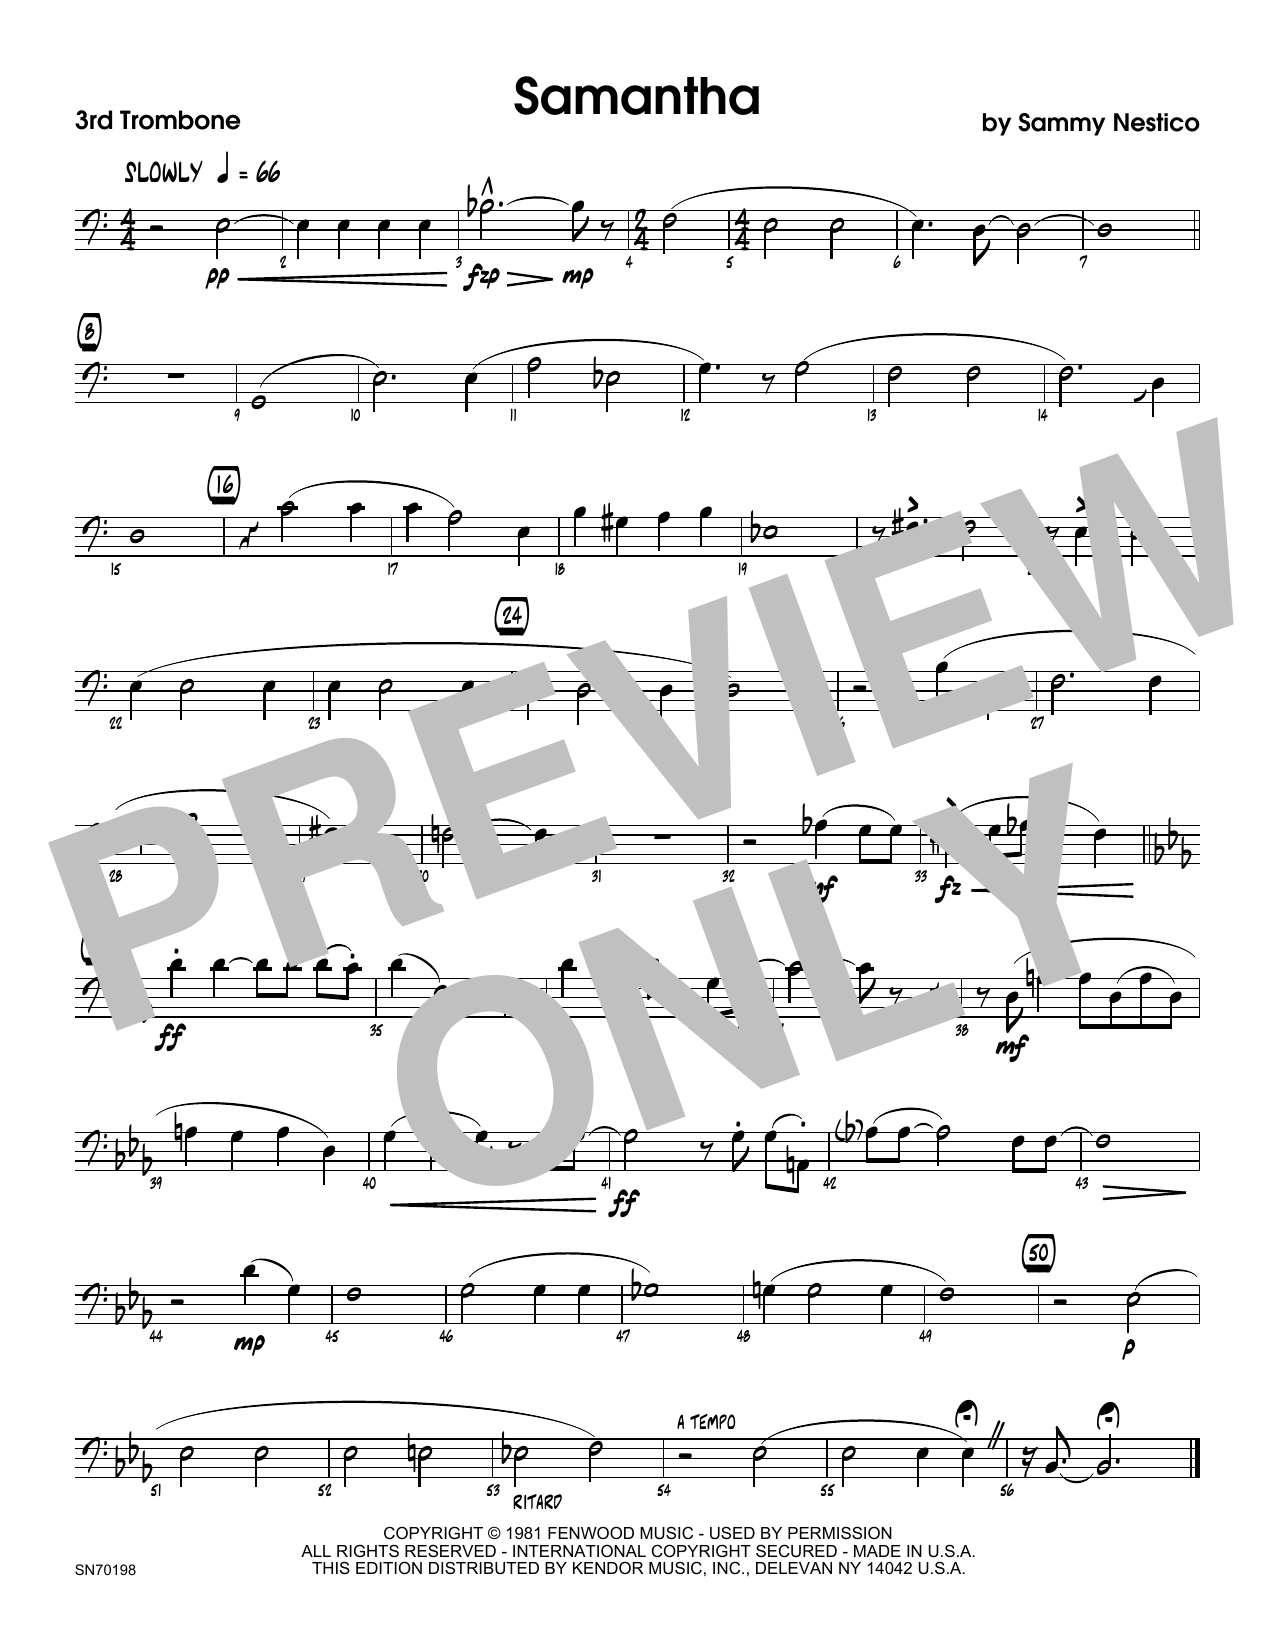 Download Sammy Nestico Samantha - 3rd Trombone Sheet Music